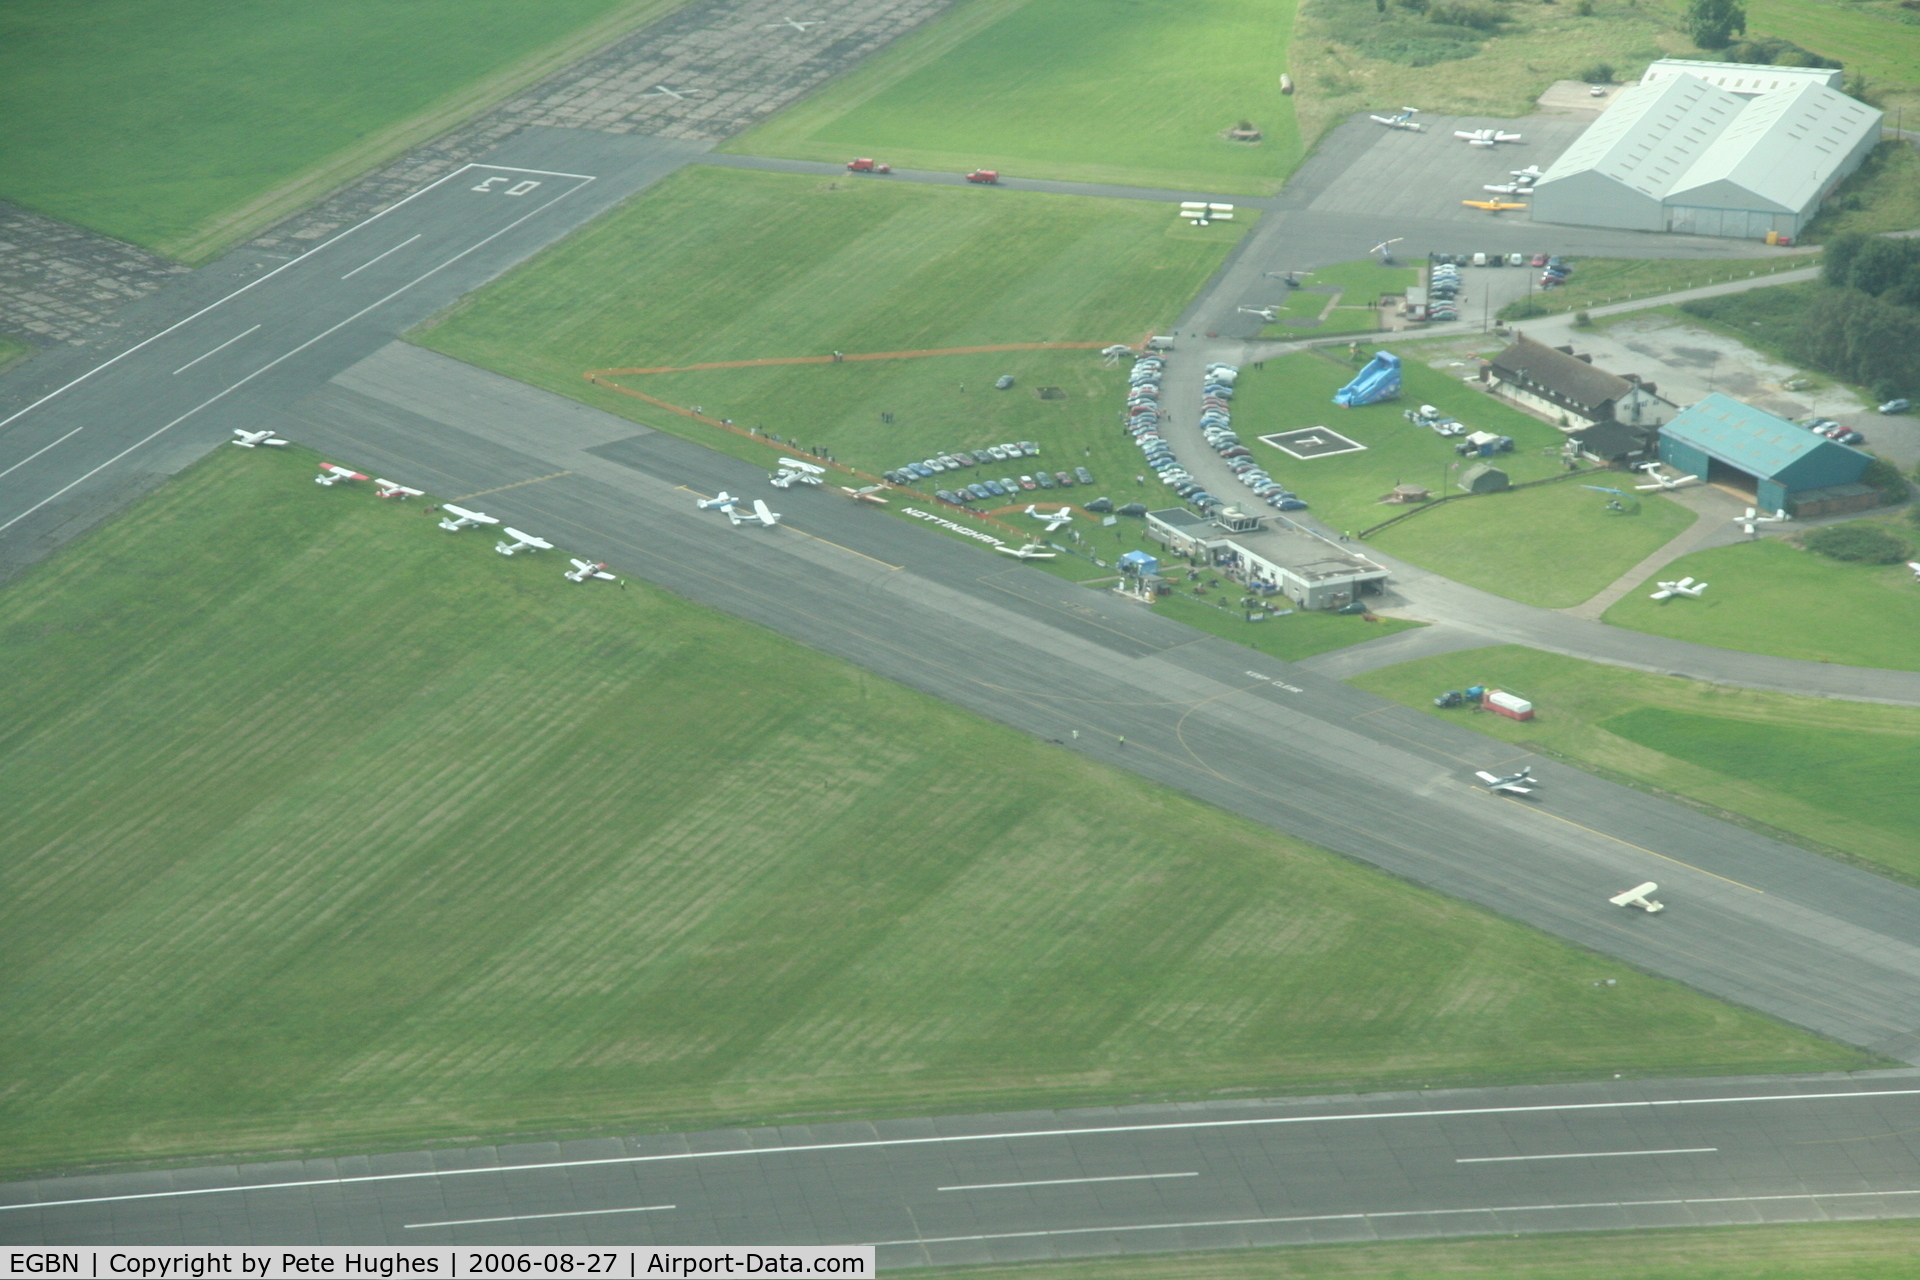 Nottingham Airport, Nottingham, England United Kingdom (EGBN) - Nottingham Tollerton airfield